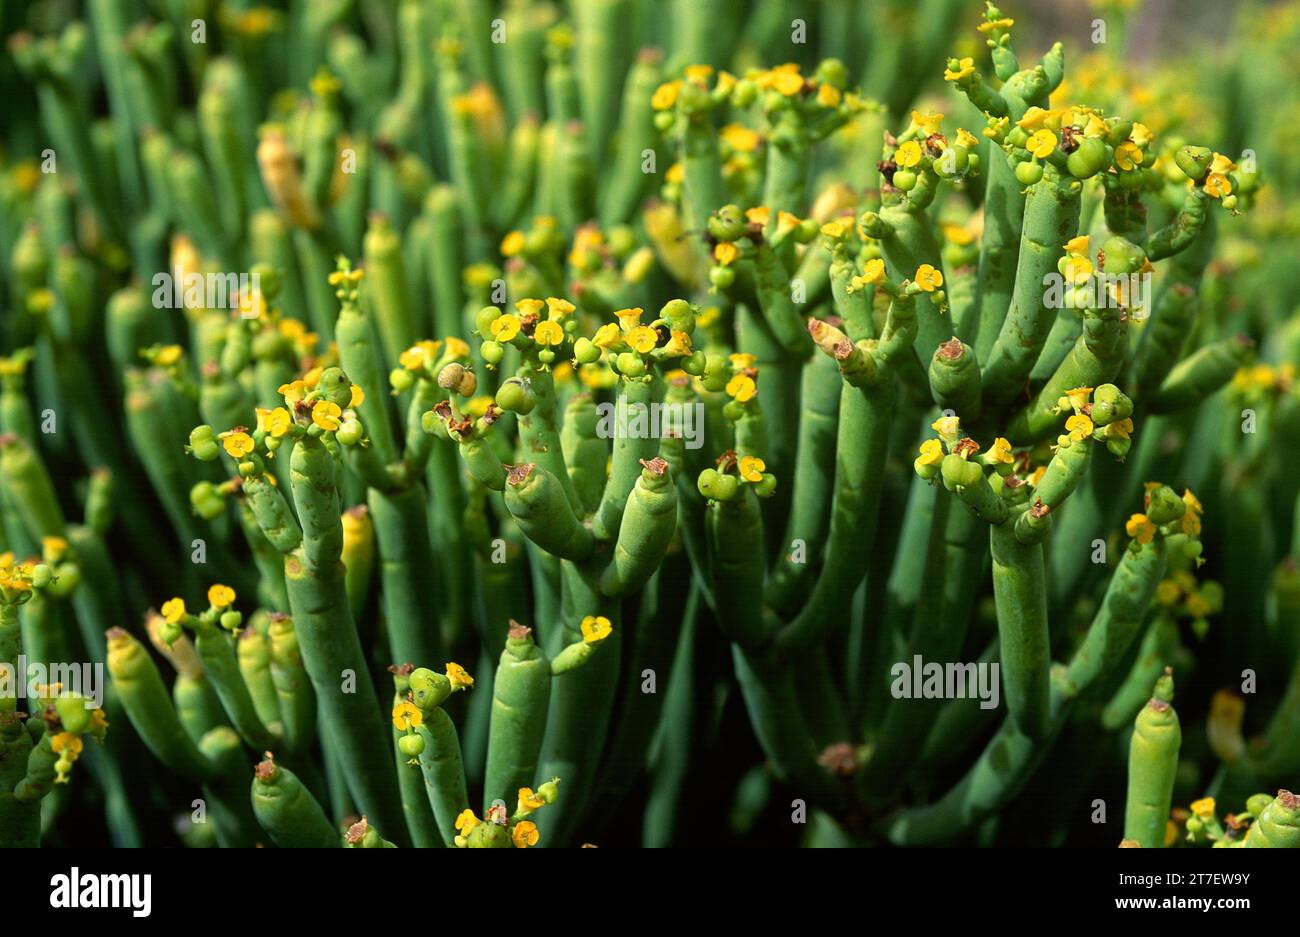 Tabaiba salvaje or tolda (Euphorbia aphylla) is a shrub endemic to Canary Islands (Tenerife, La Gomera and Gran Canaria). This photo was taken in Tene Stock Photo